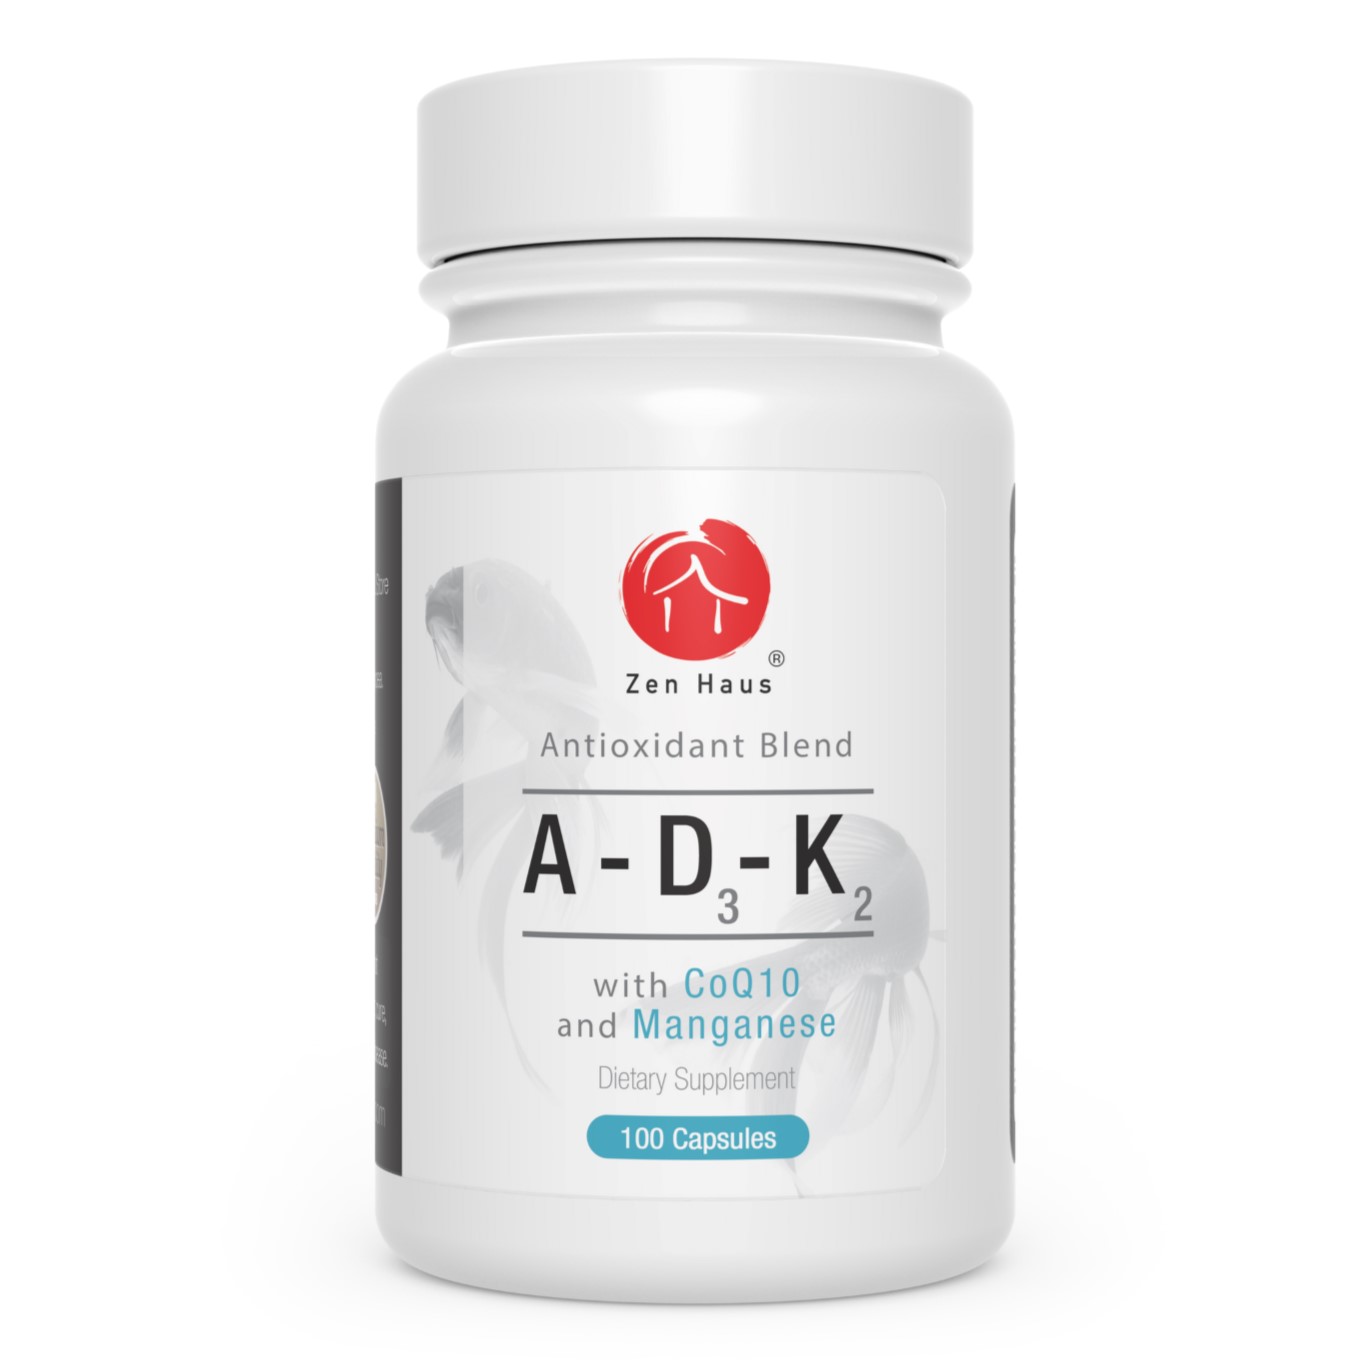 Zen Haus ADK D3/K2 Complex - Vitamin A, Vitamin D3, Vitamin K2, CoQ10, Manganese, Boron, Vitamin E, L-Leucine, Alpha Lipoic Acid, Antioxidants - 100 Capsules